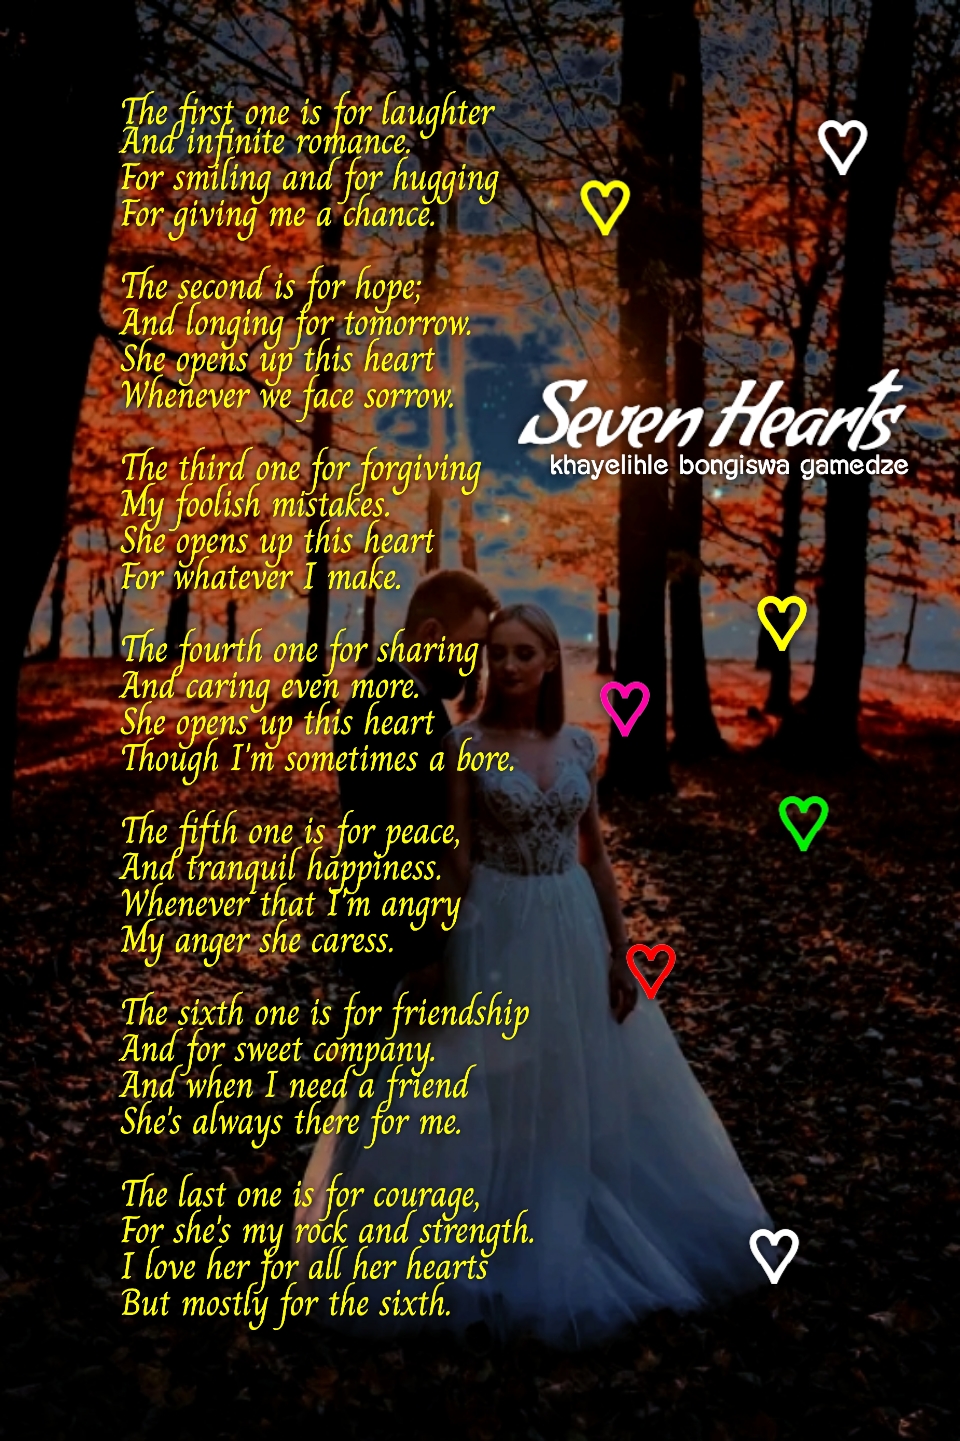 Seven Hearts